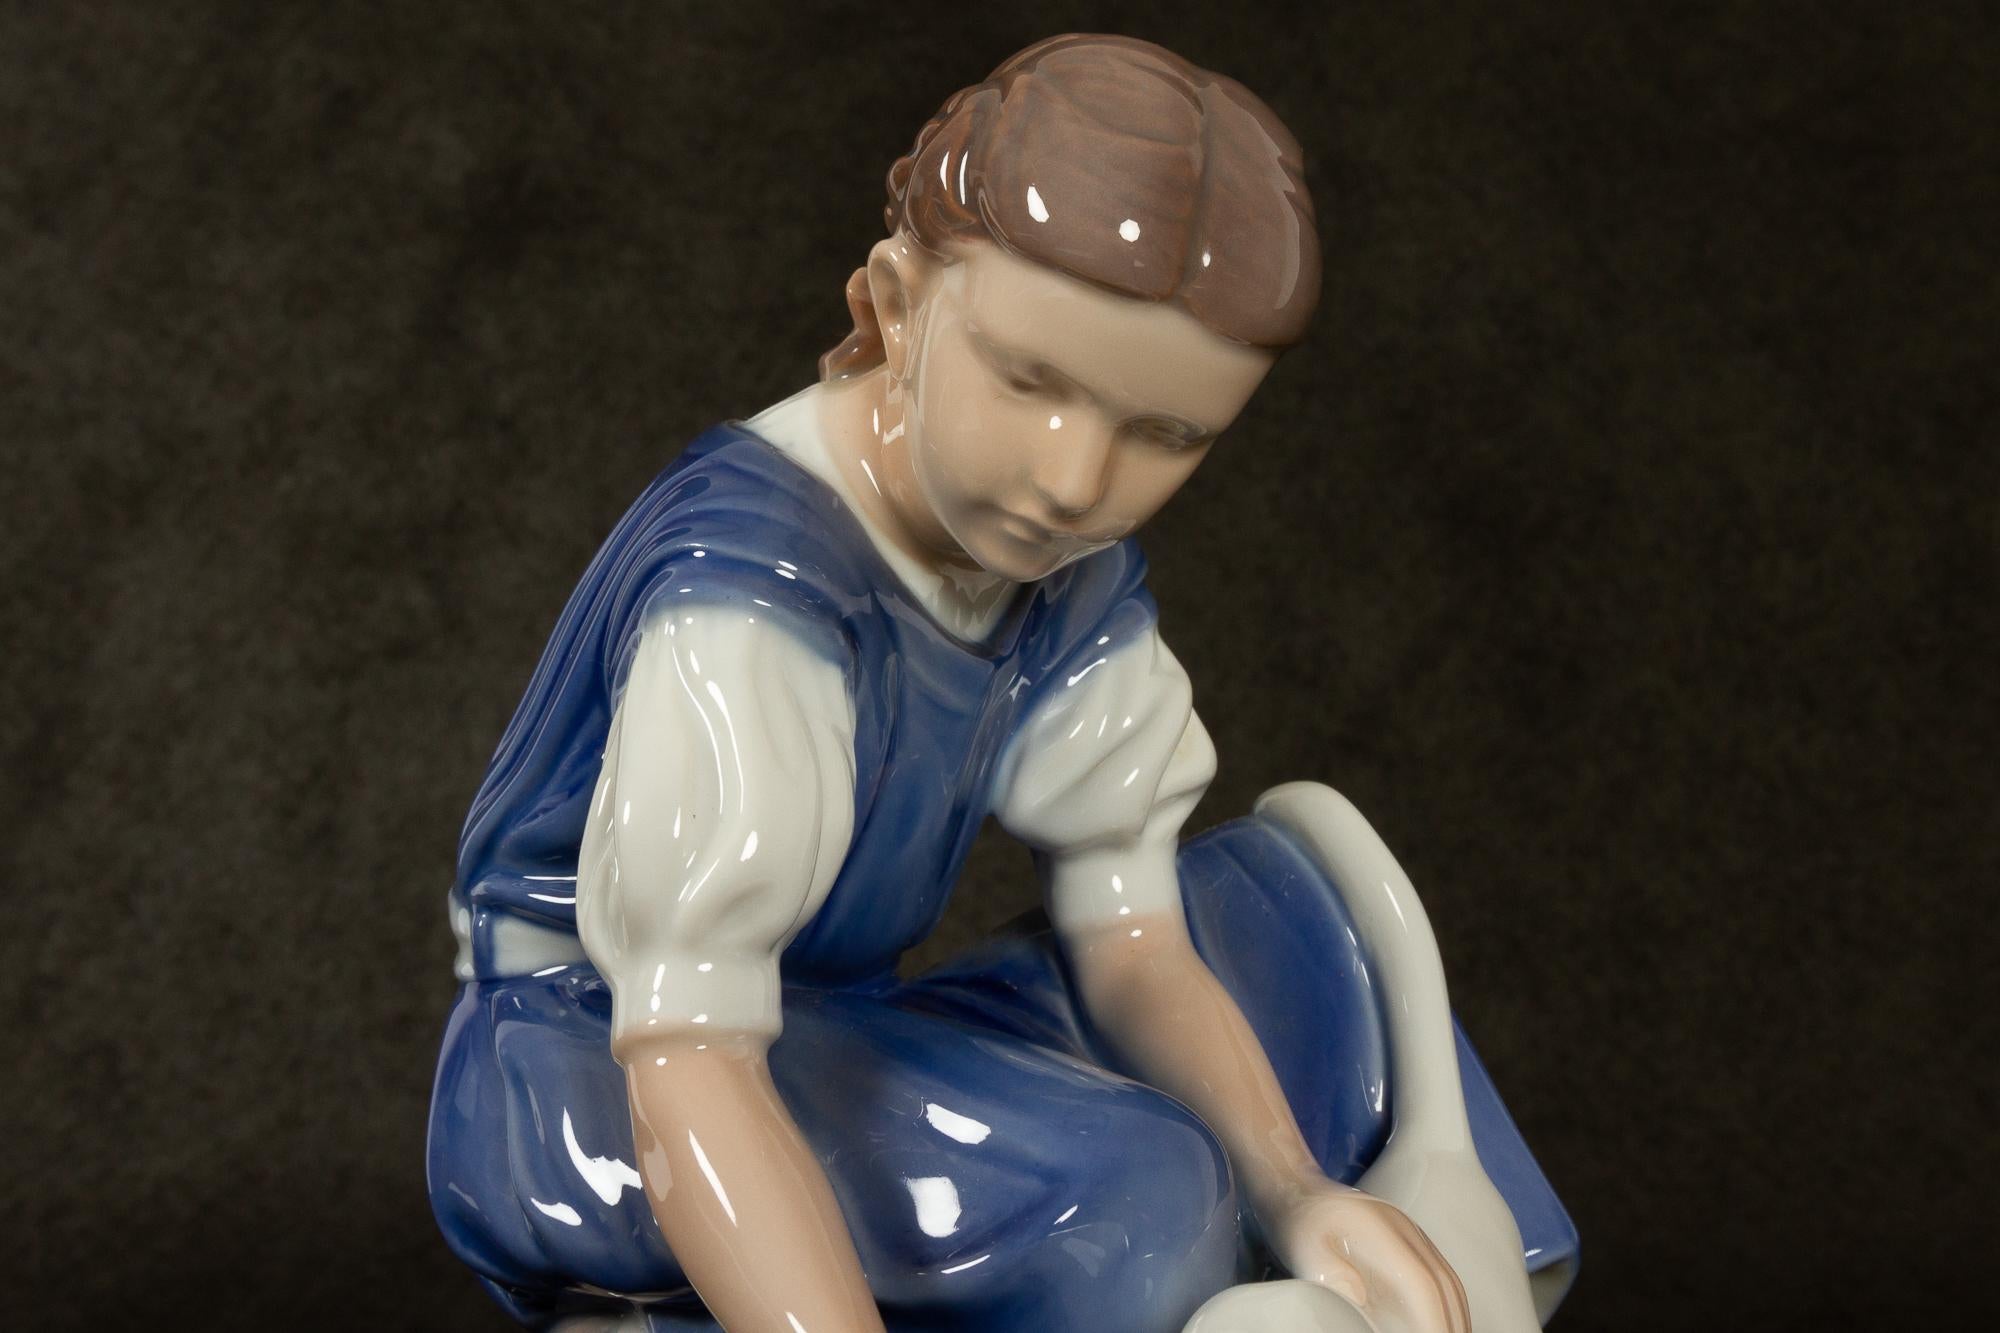 Vintage Danish Porcelain Figurine 